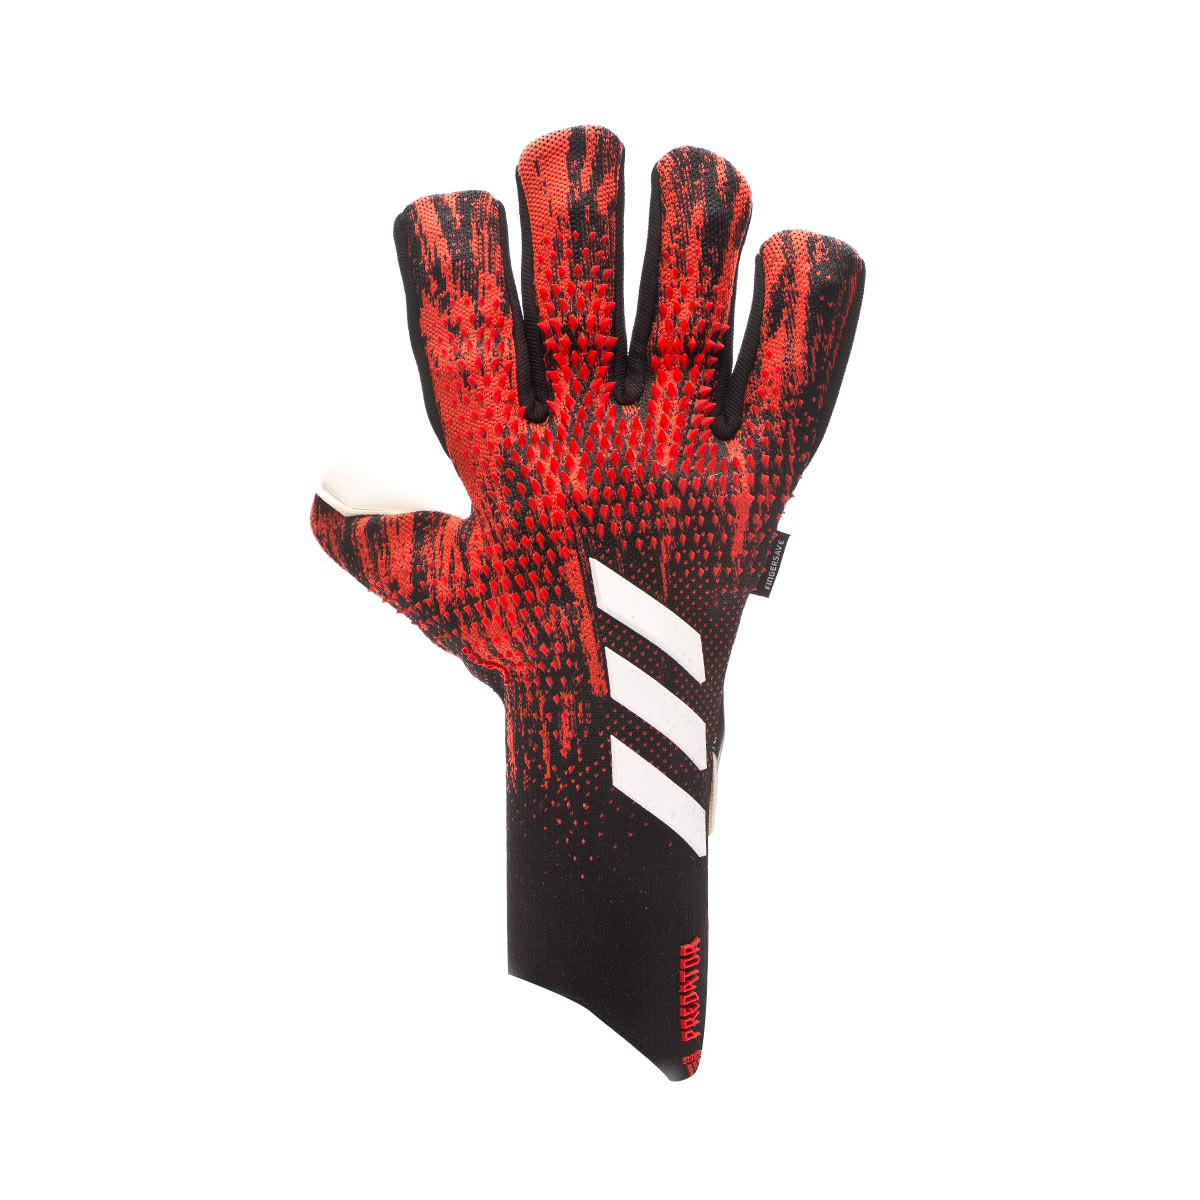 predator 20 pro fingersave gloves